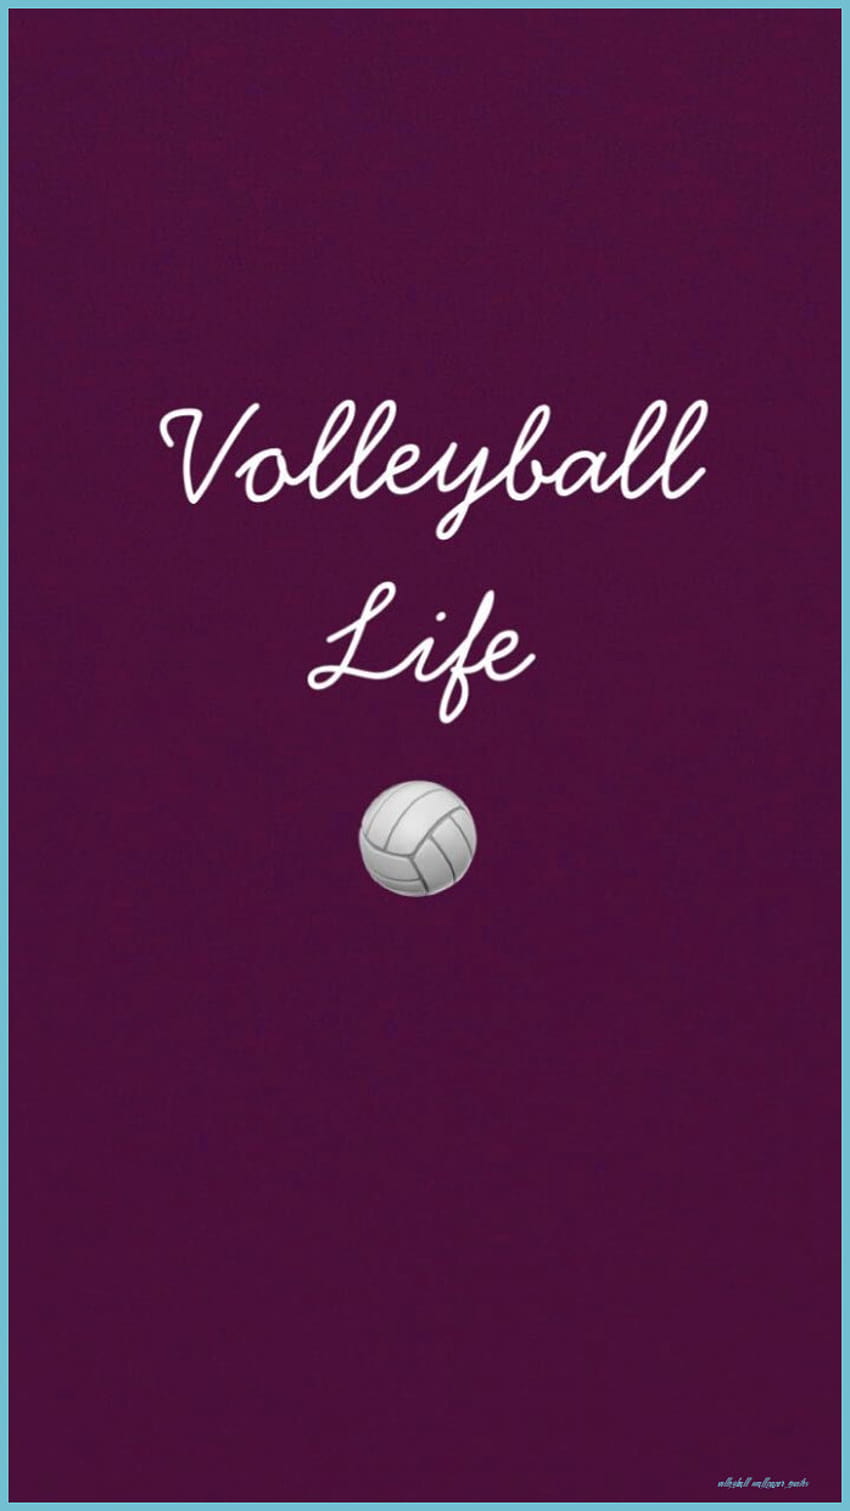 5249 Volleyball Wallpaper Images Stock Photos  Vectors  Shutterstock